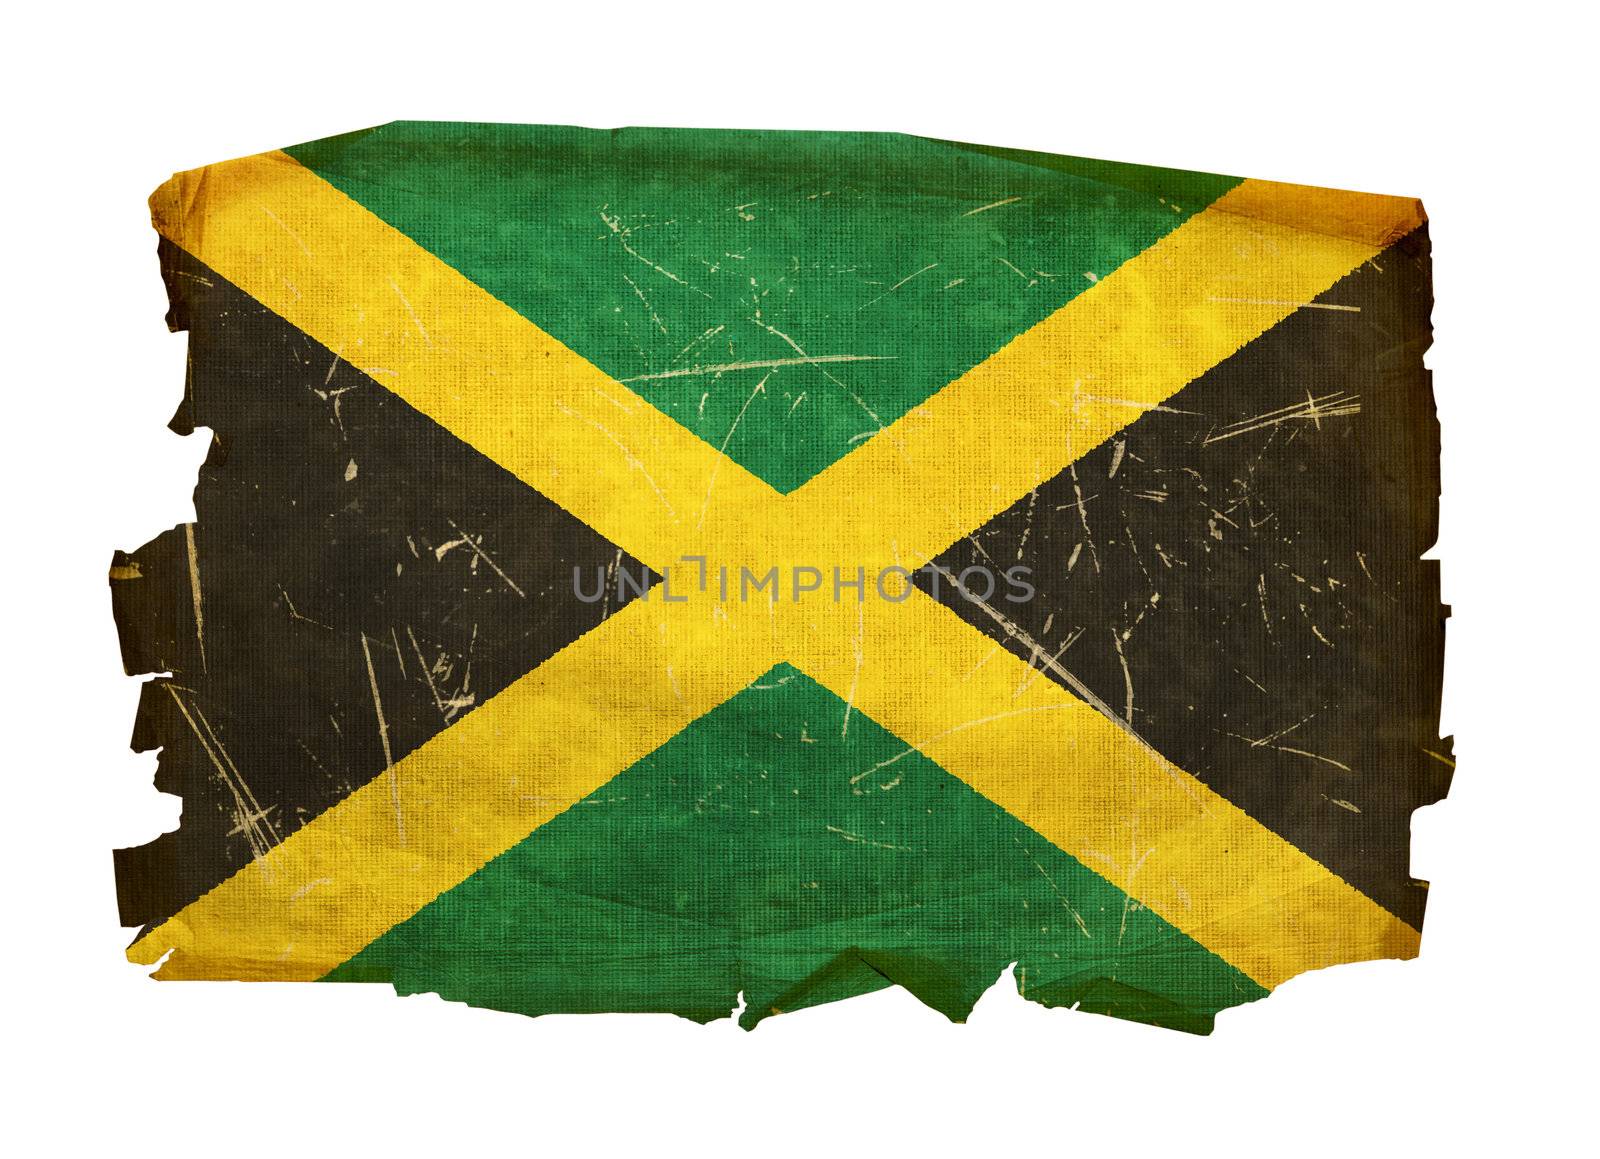 Jamaica Flag old, isolated on white background.